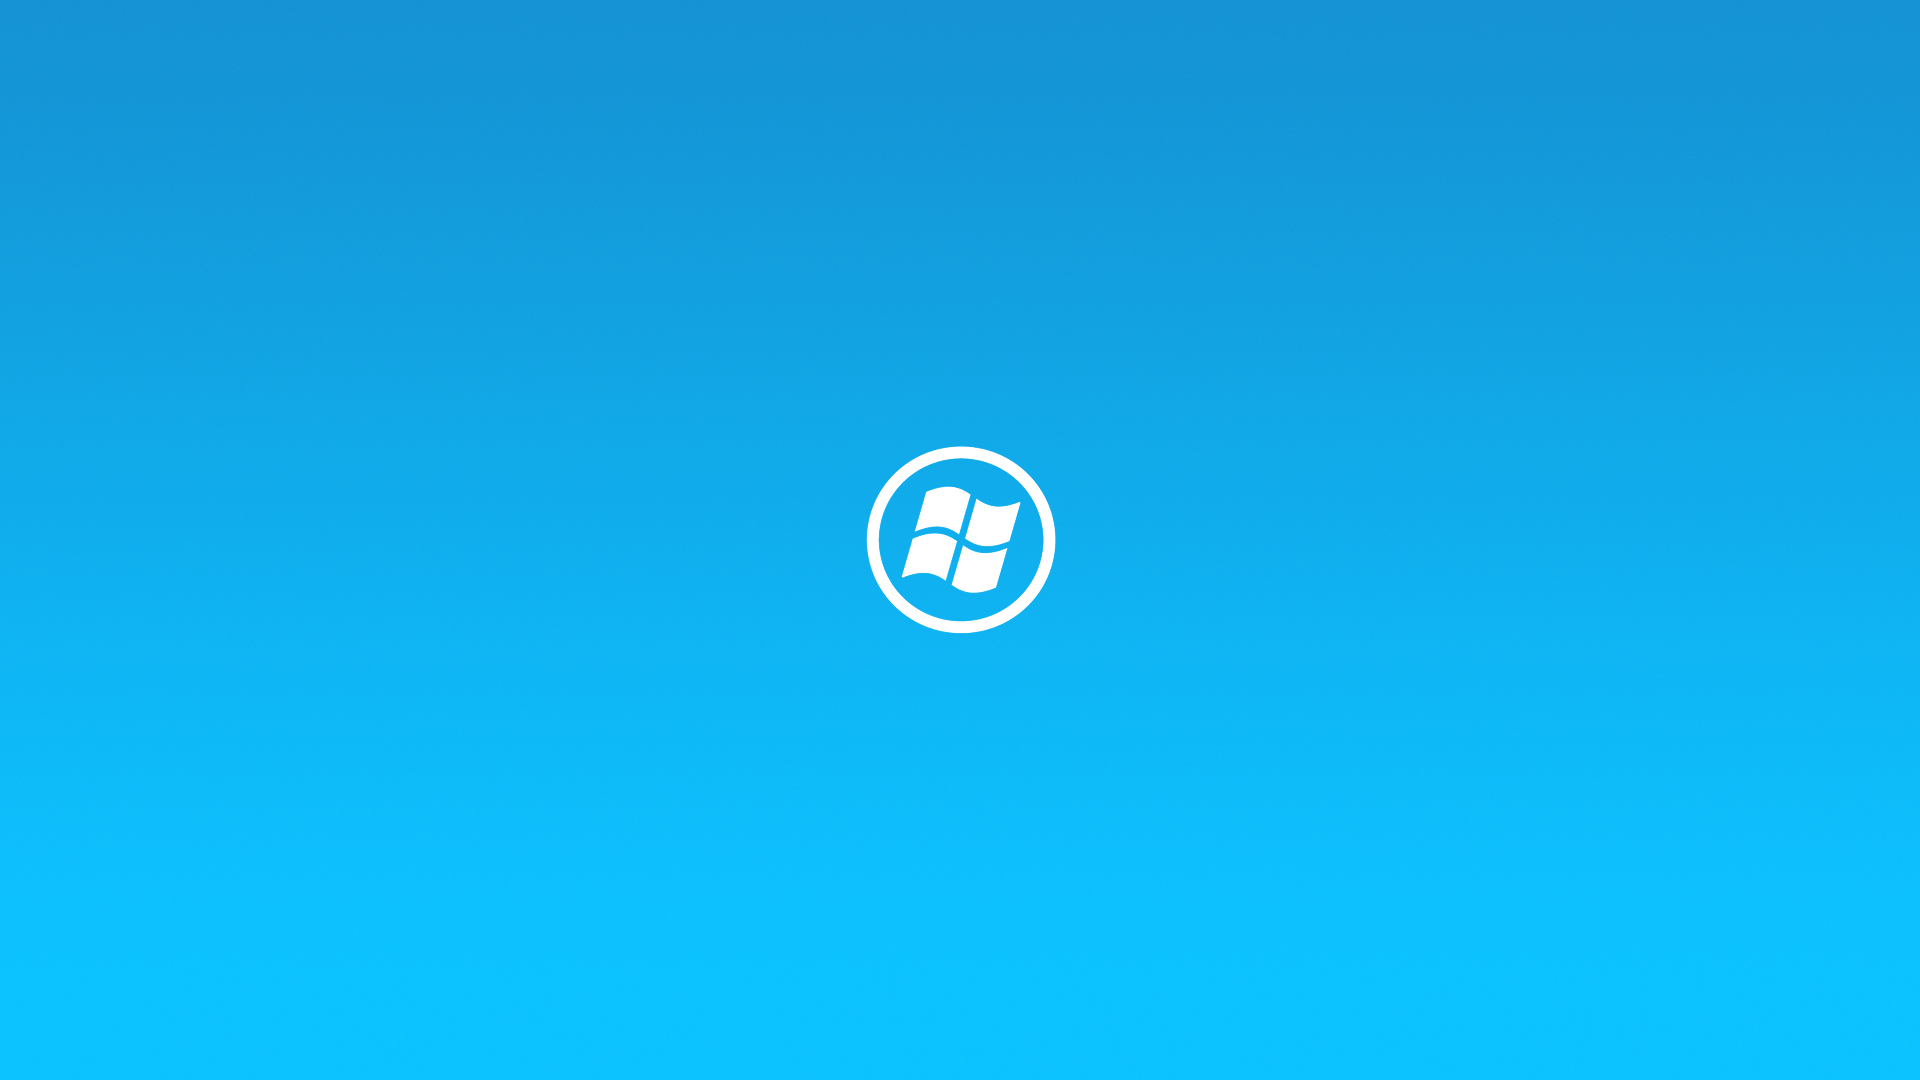 Windows 8 blue wallpaper | 1920x1080 | #22300